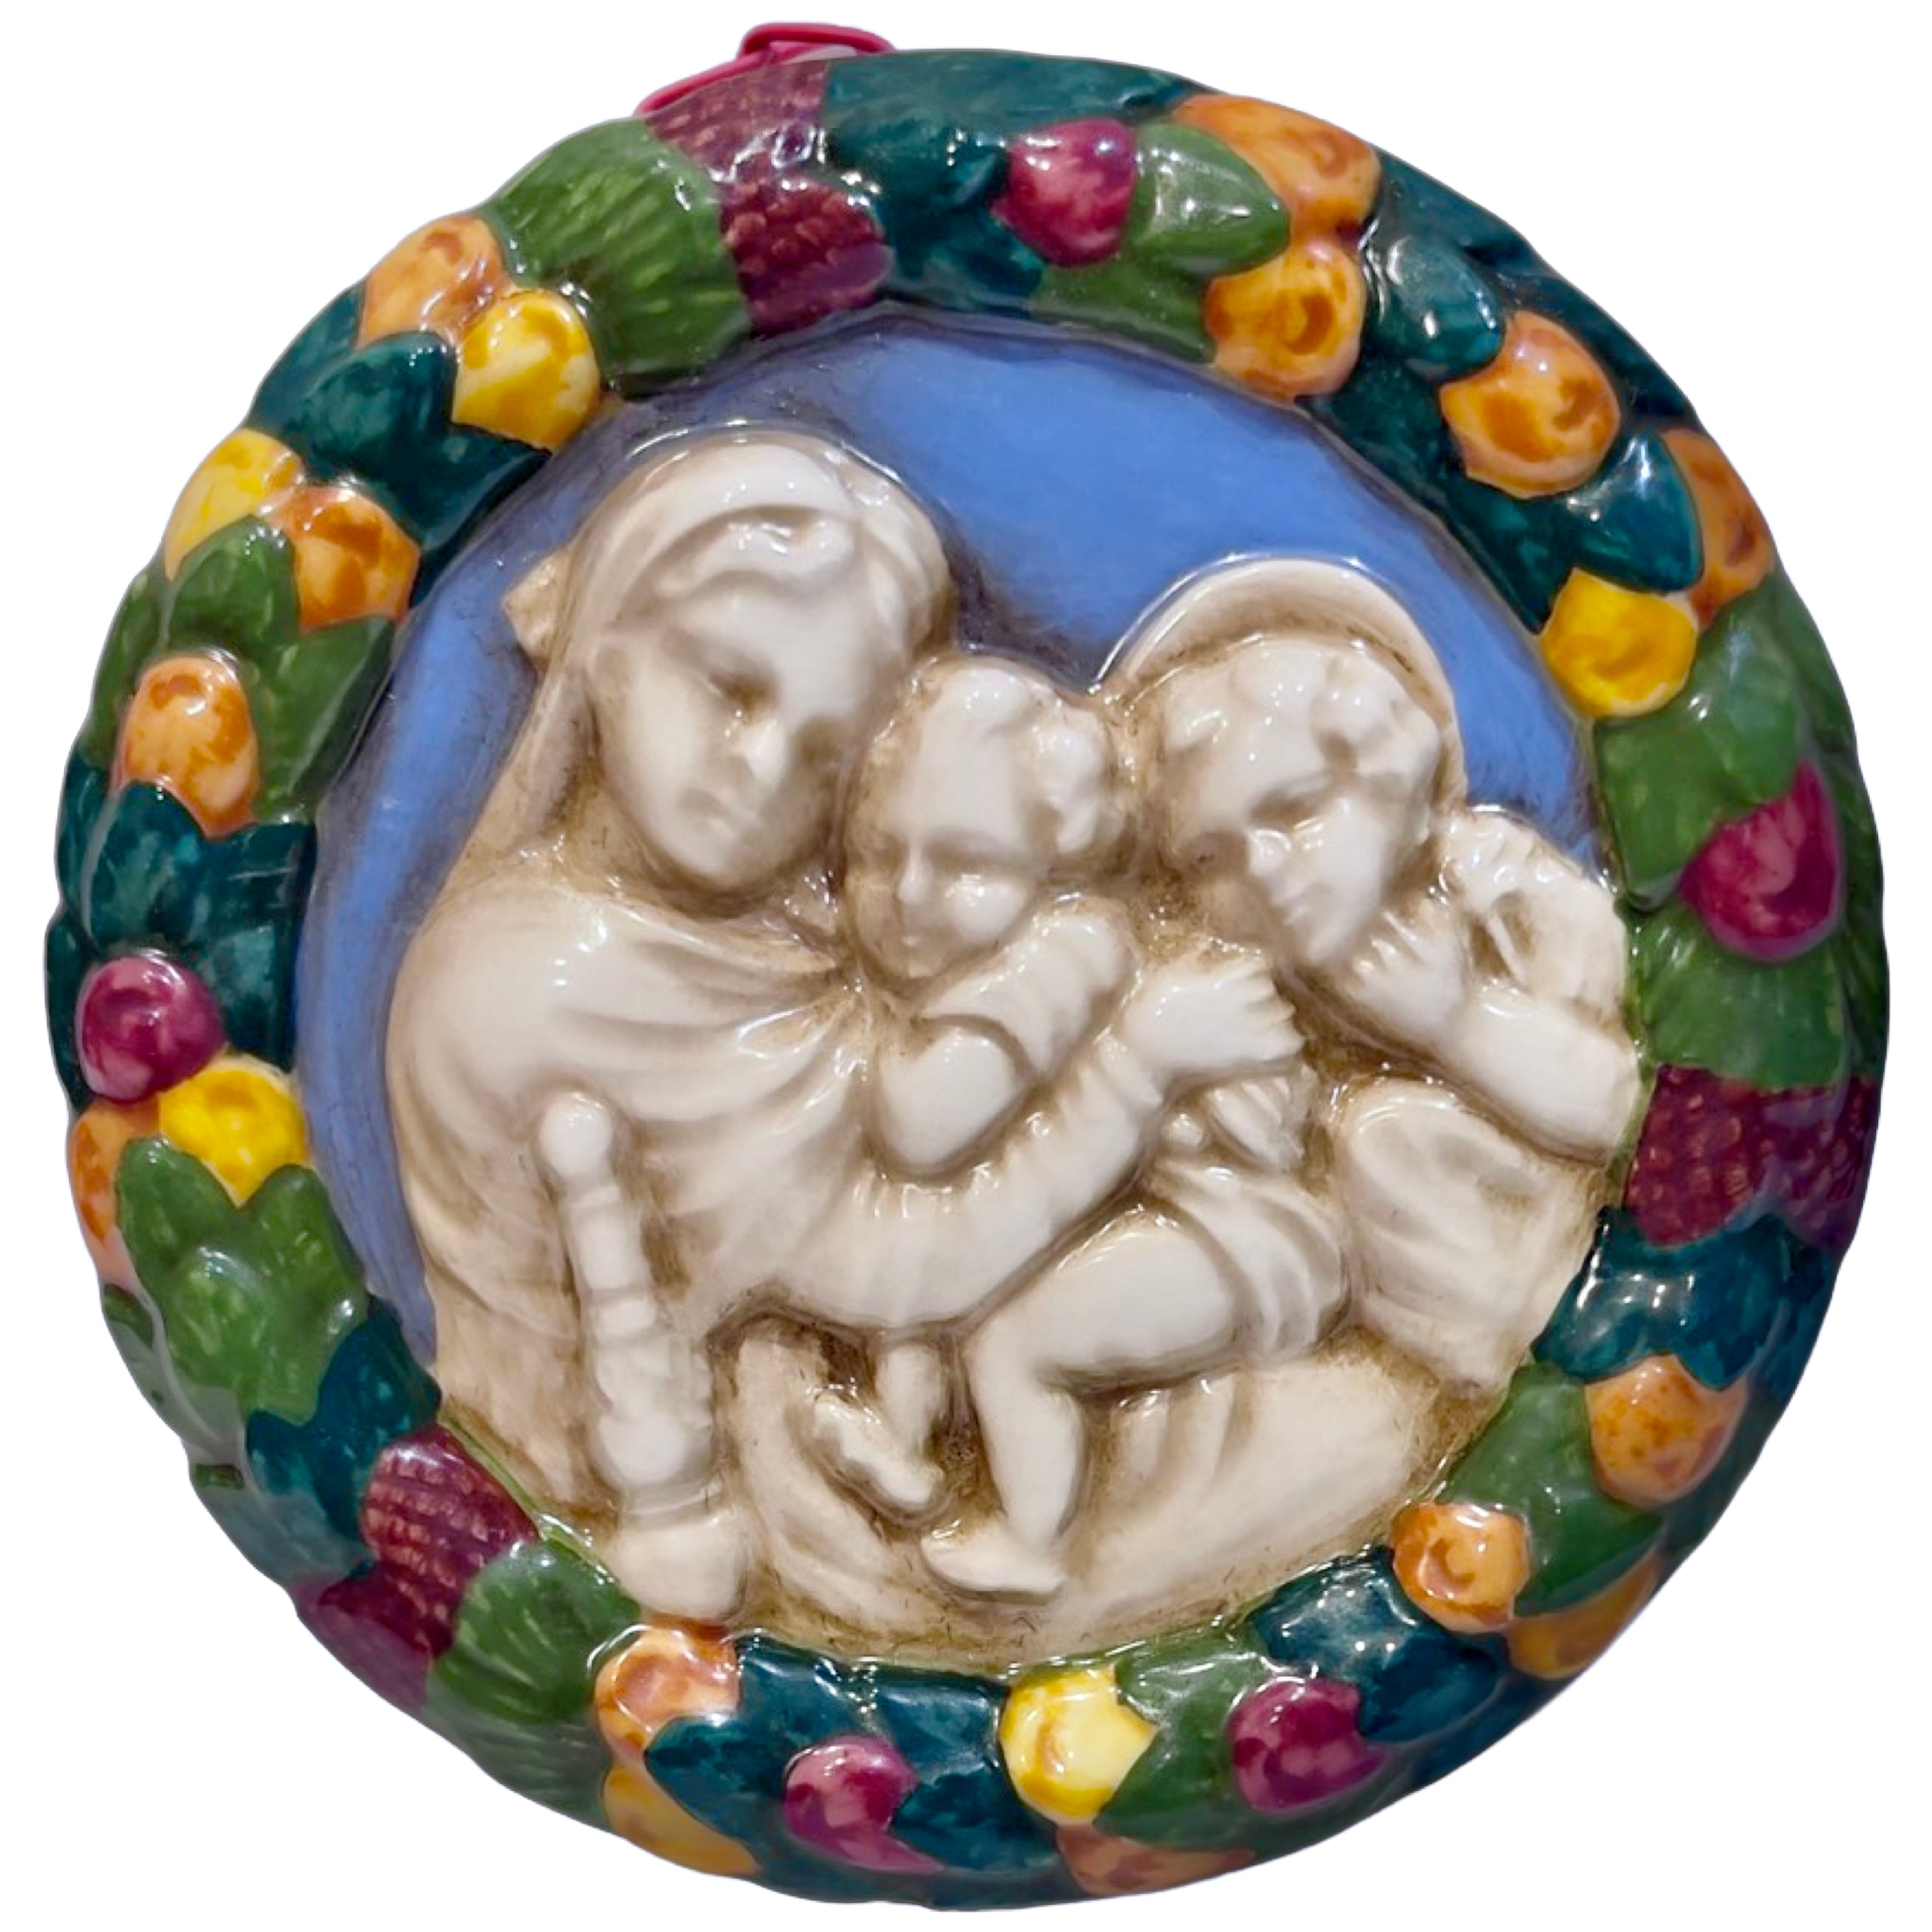 Della Robbia - small:  Mary, Baby Jesus and Angel